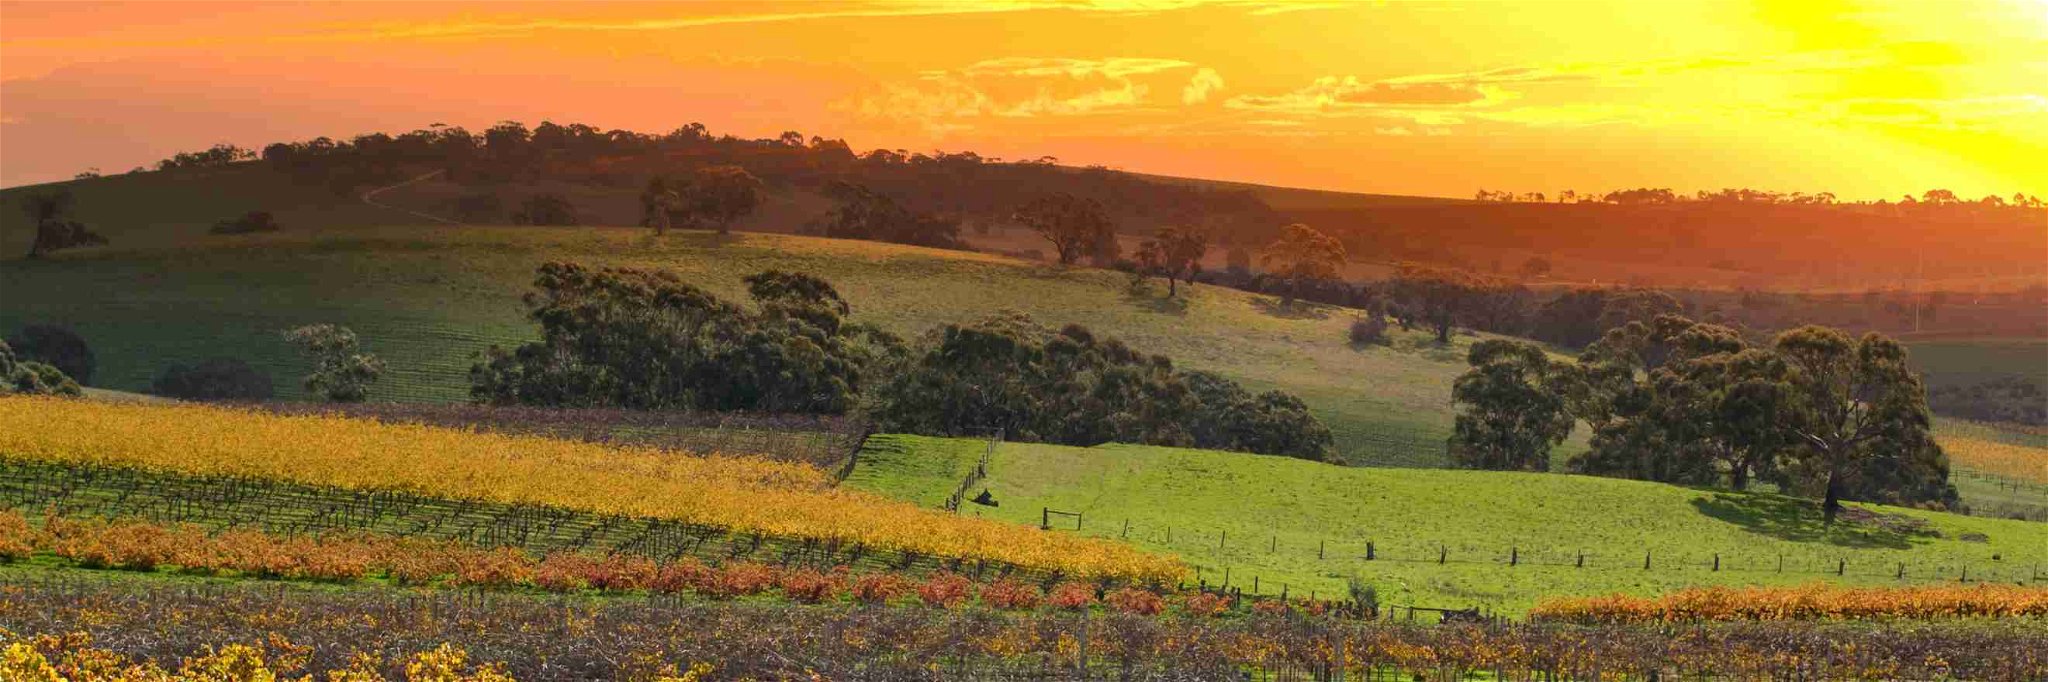 Vineyards in South Australia's Barossa Valley